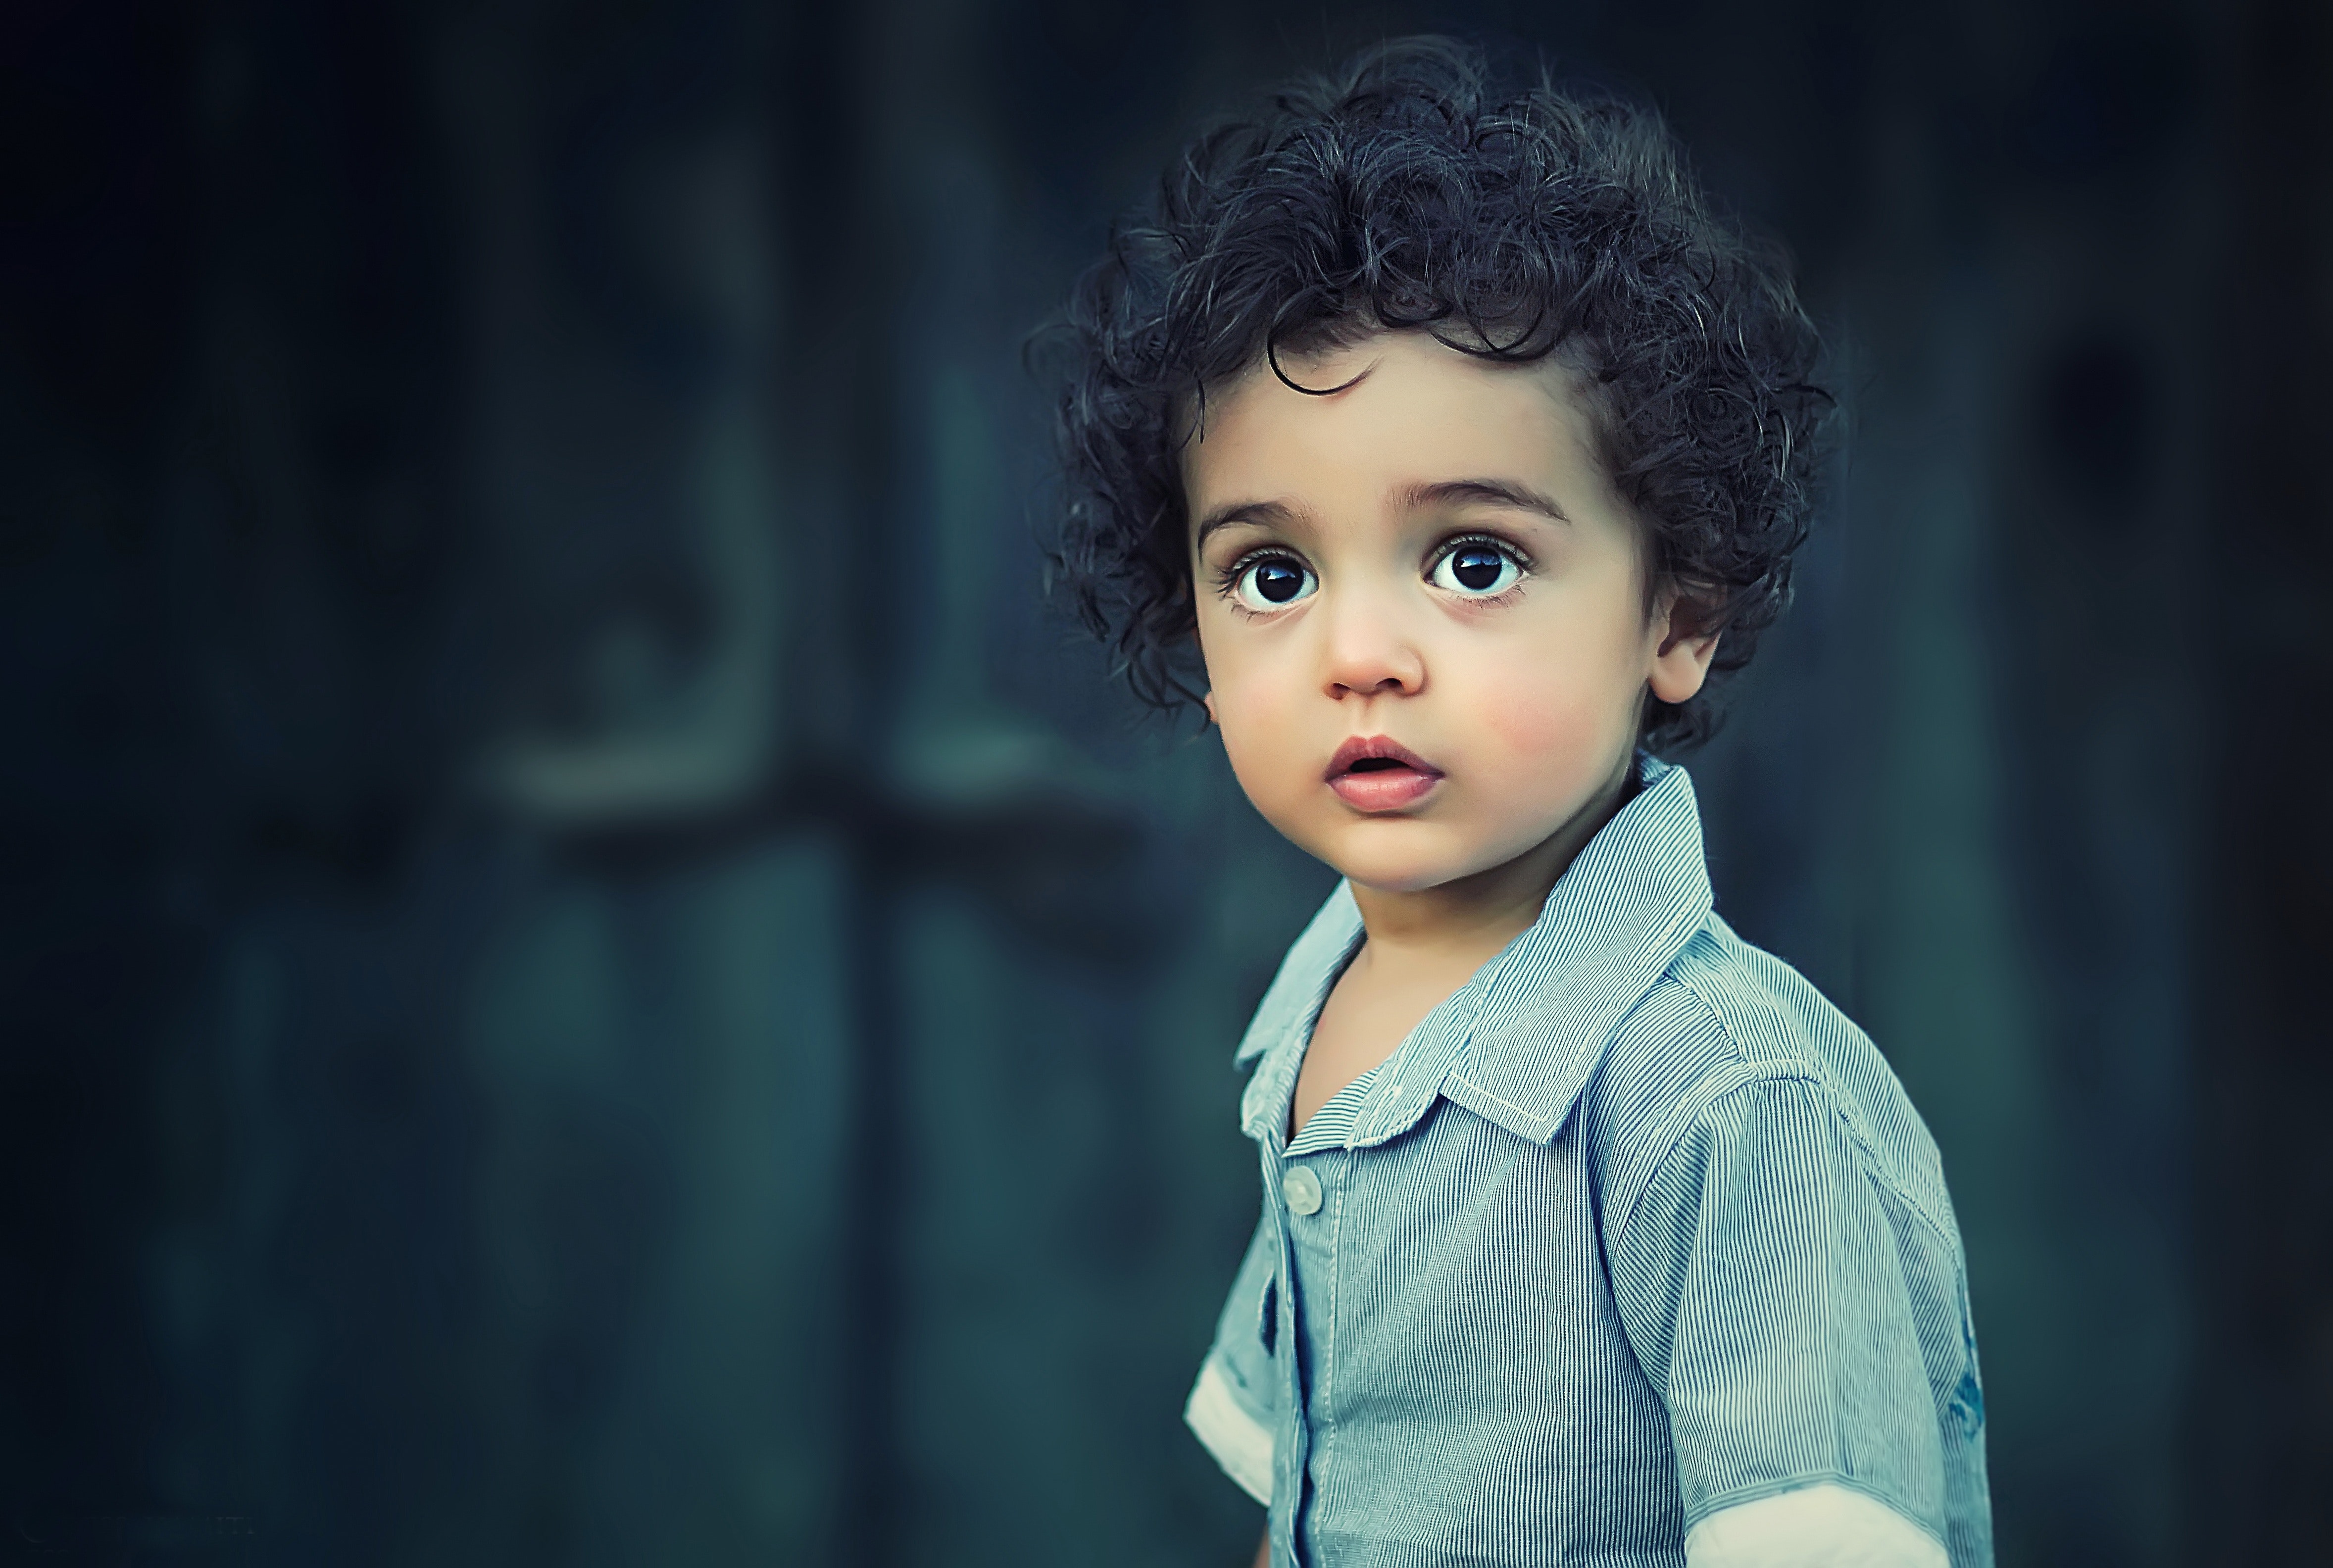 Best Cute Baby Boy Image · 100% Free Downloads